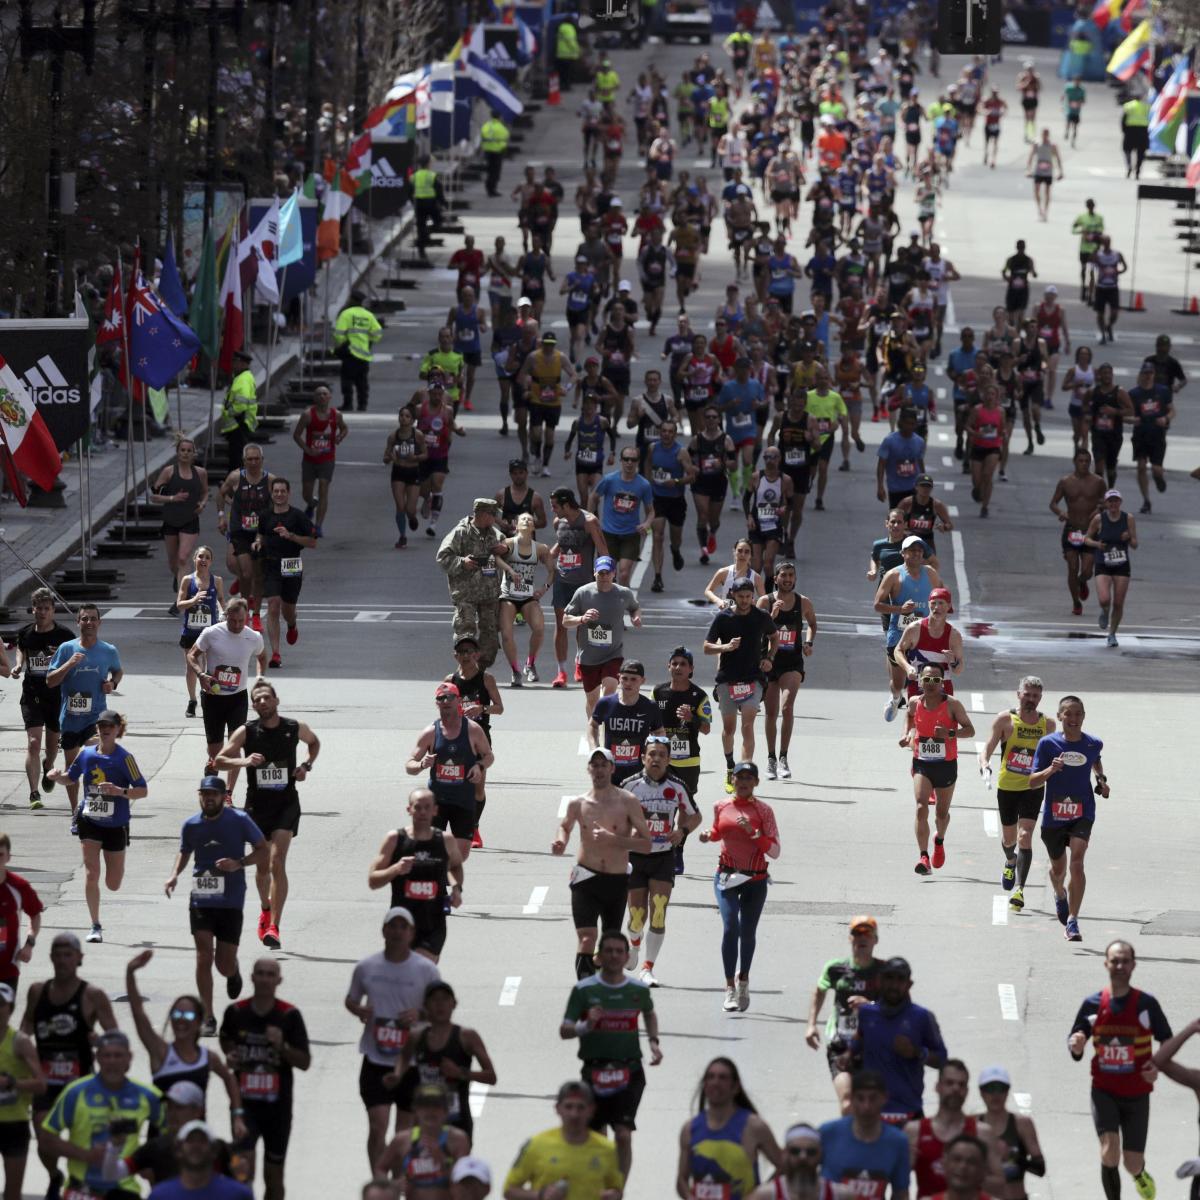 China Bans 3 Runners For Life After Cheating at 2019 Boston Marathon